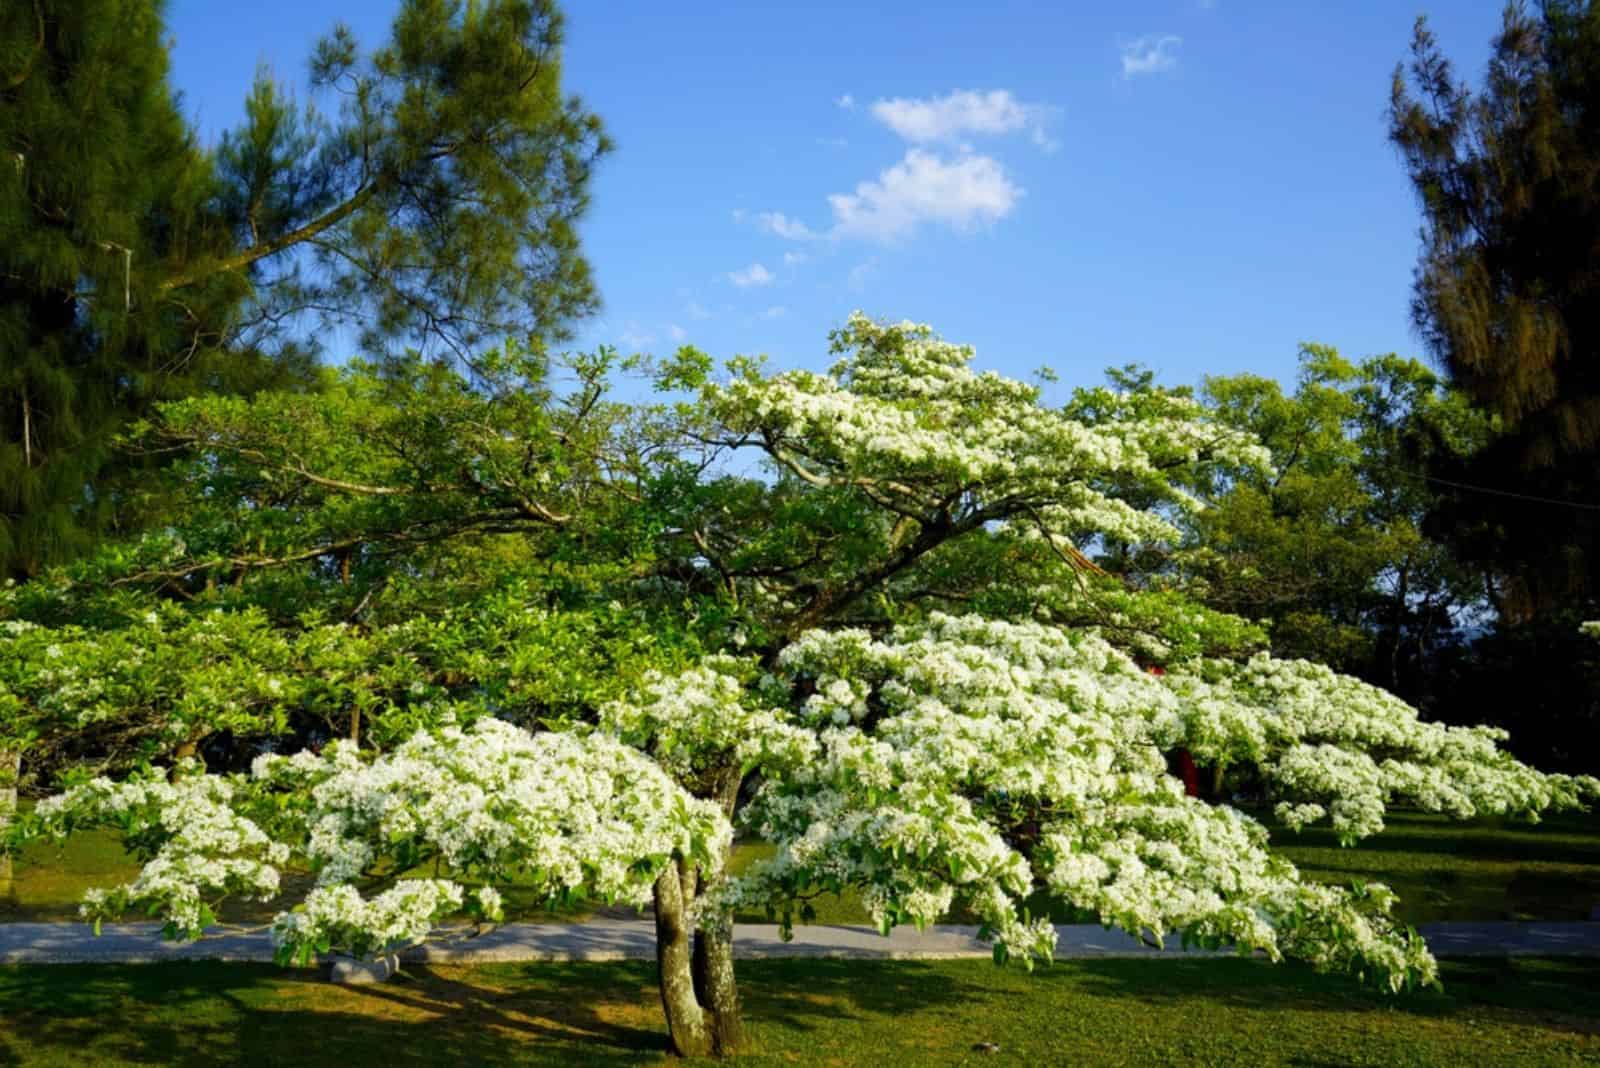 The white flowers of Chinese Fringe tree